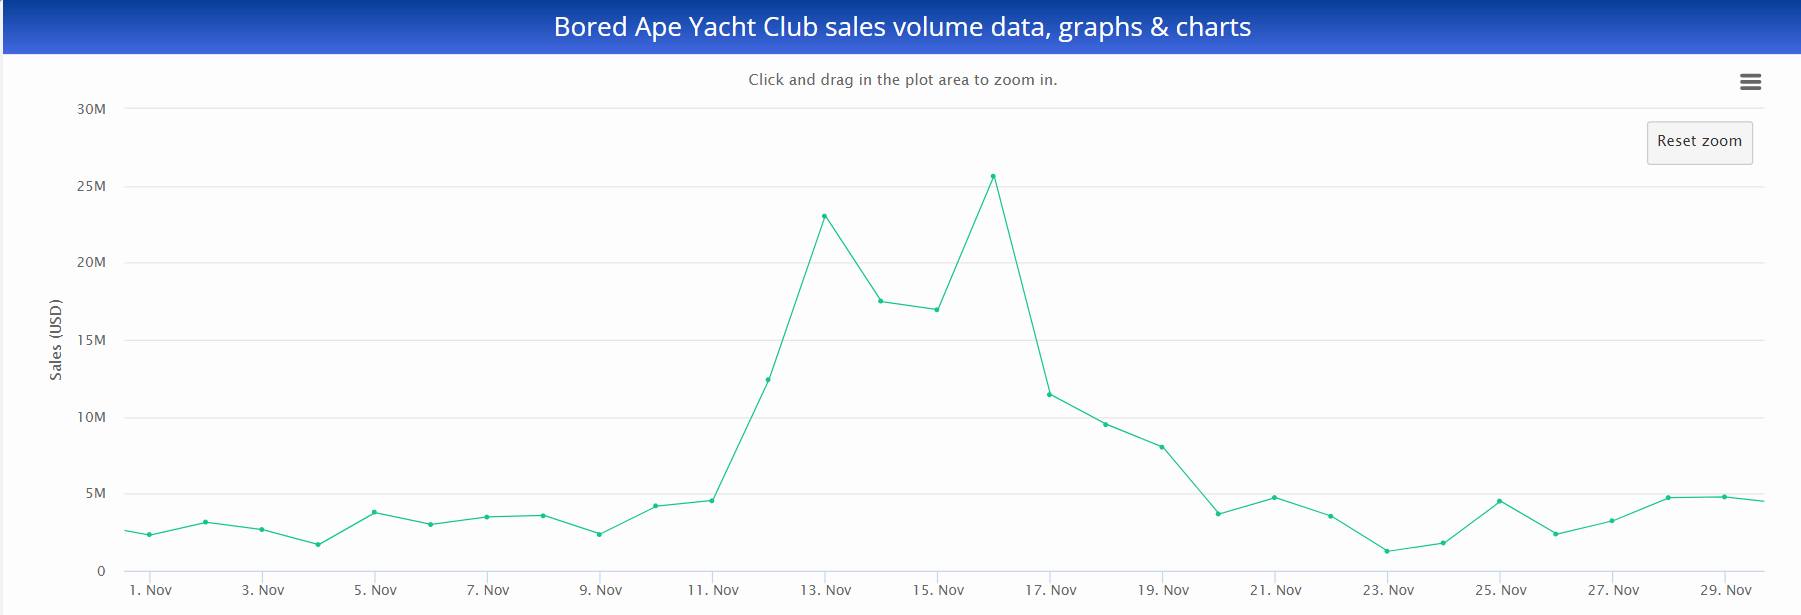 Bored Ape Yacht Club Sales Decreased By $200 Million